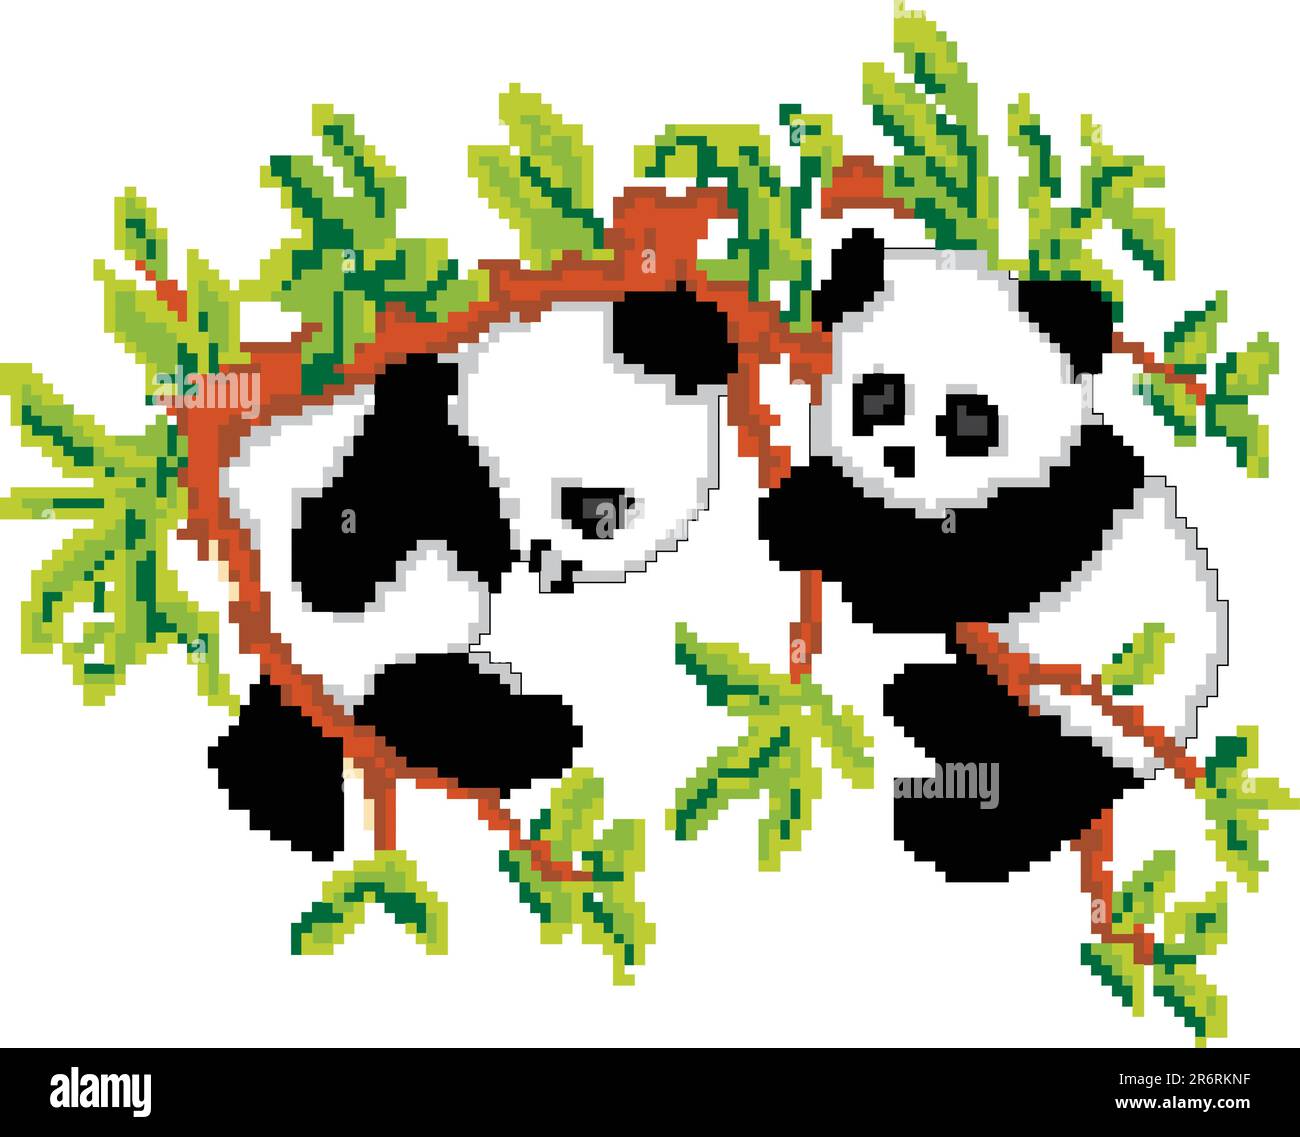 Pandas resting on Tree based on pixel art Stock Vector